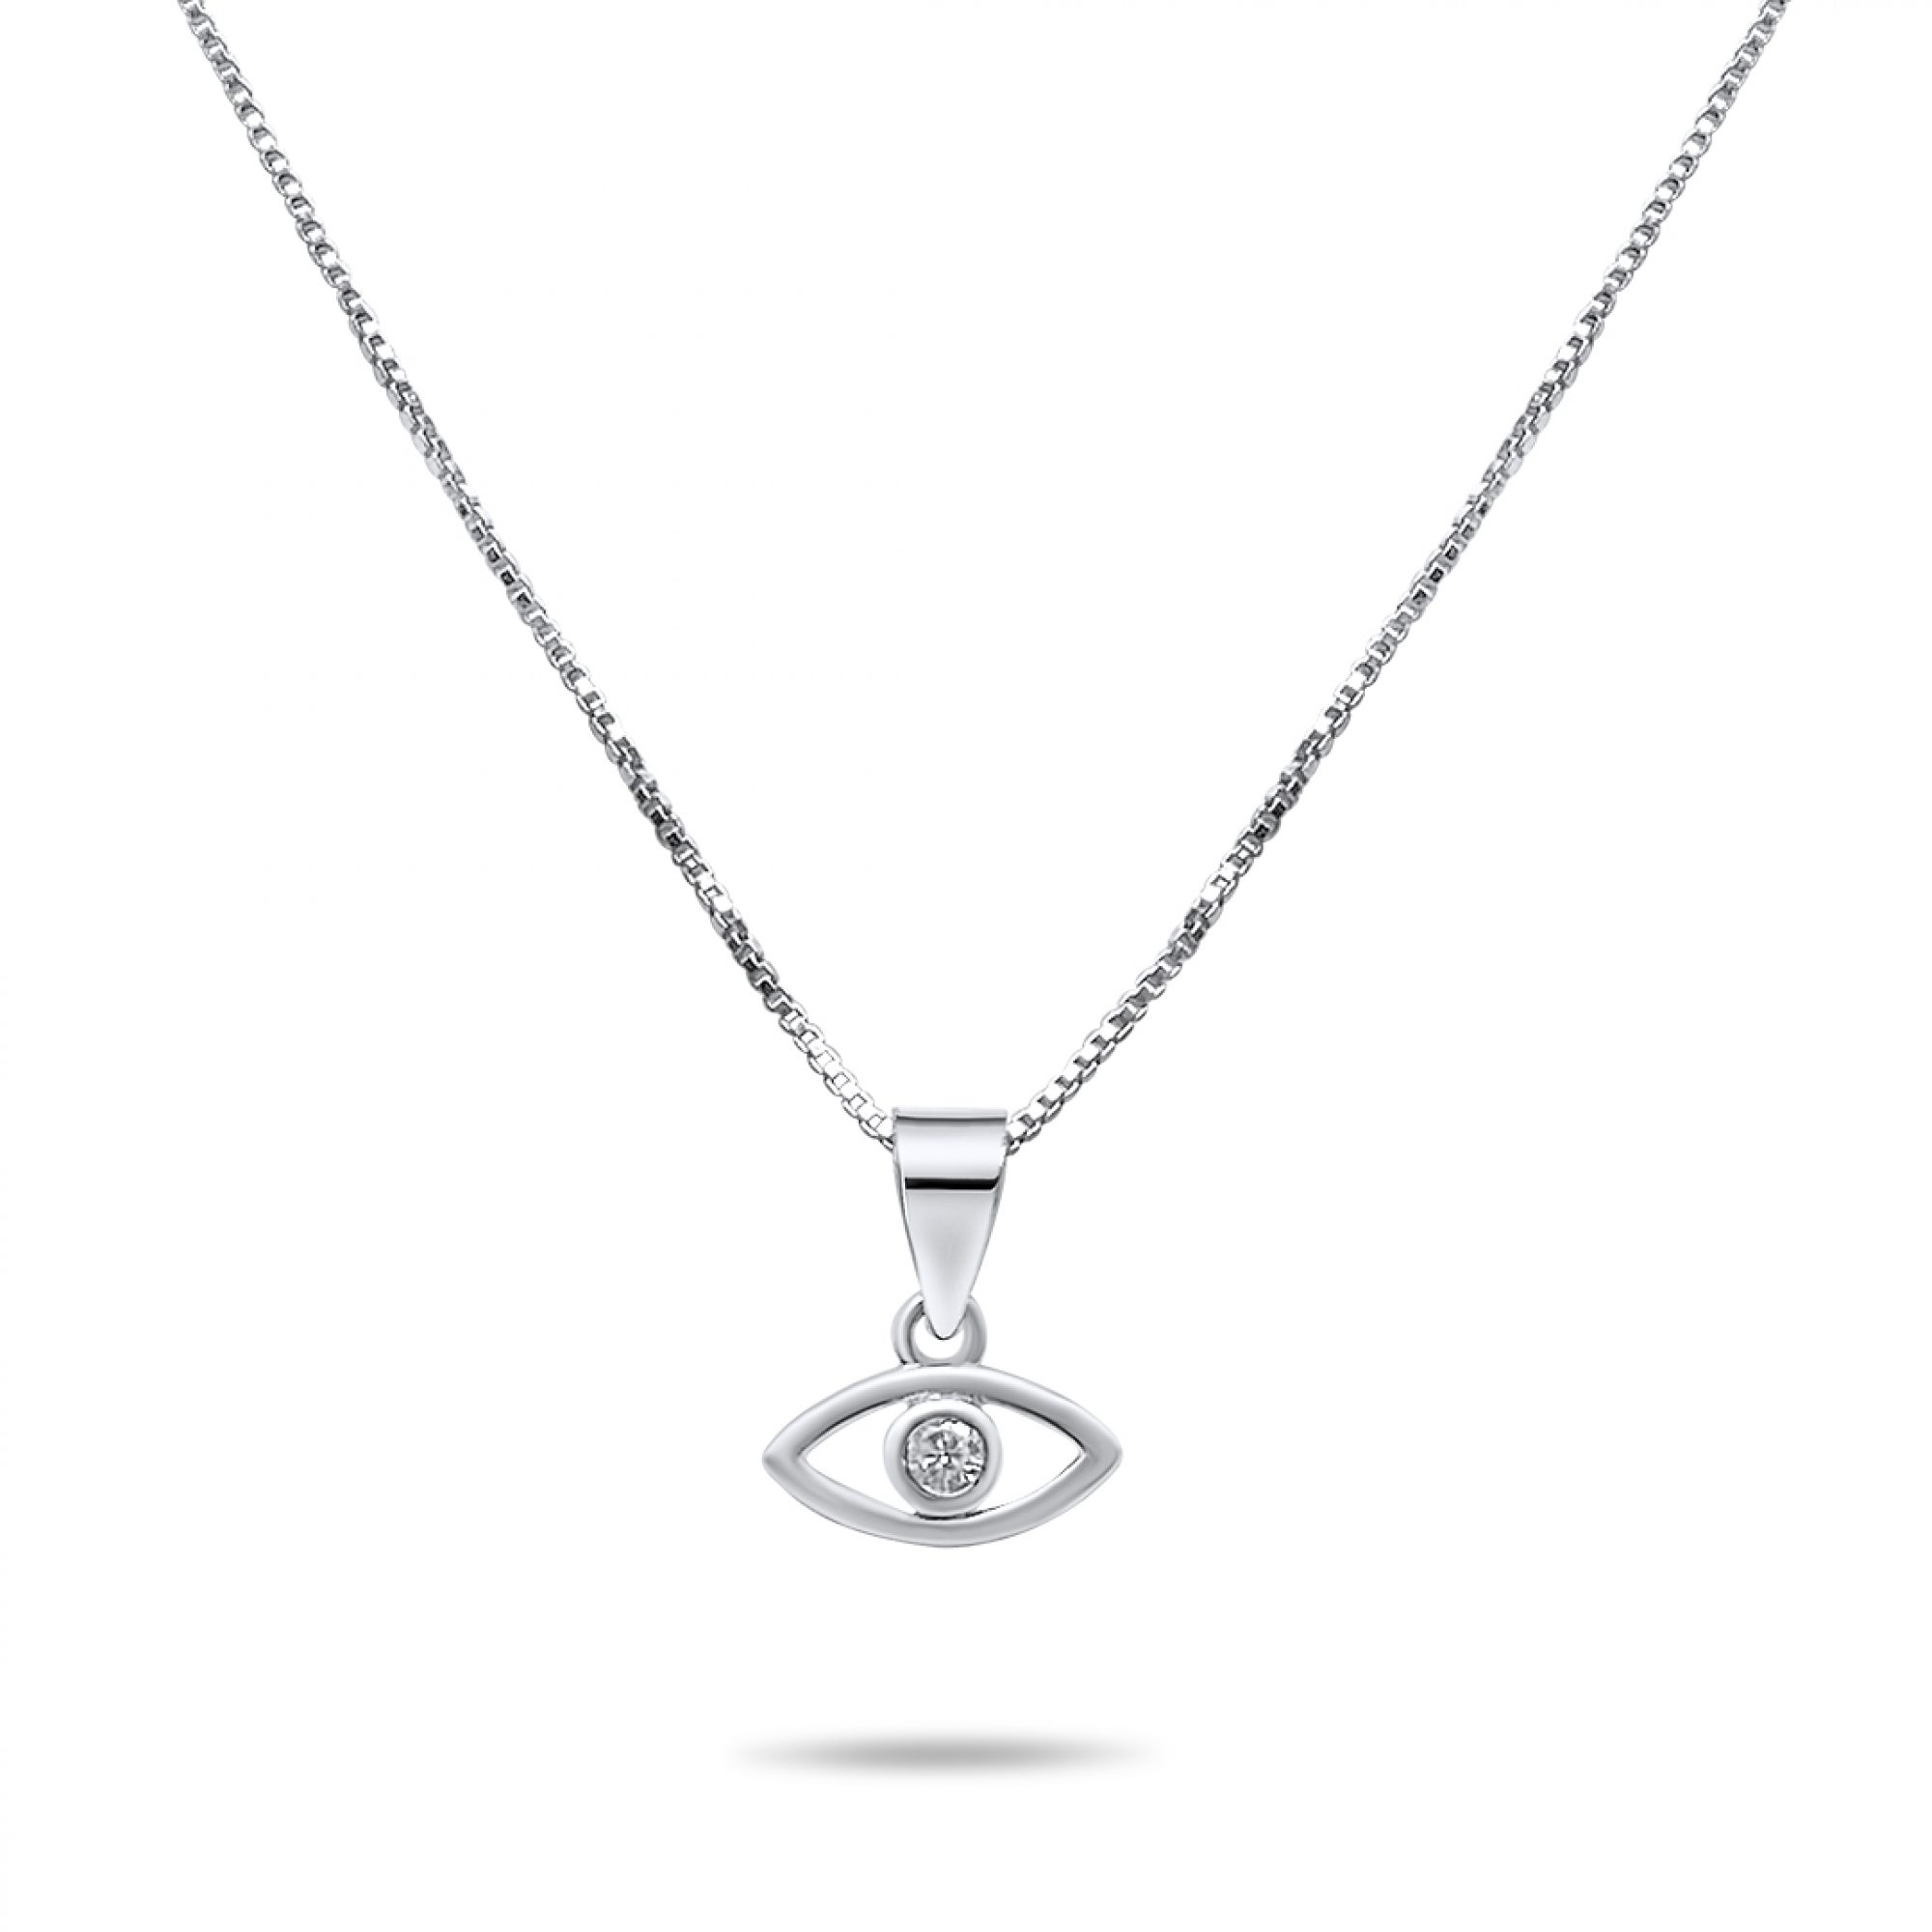 Eye pendant necklace with zircon stone